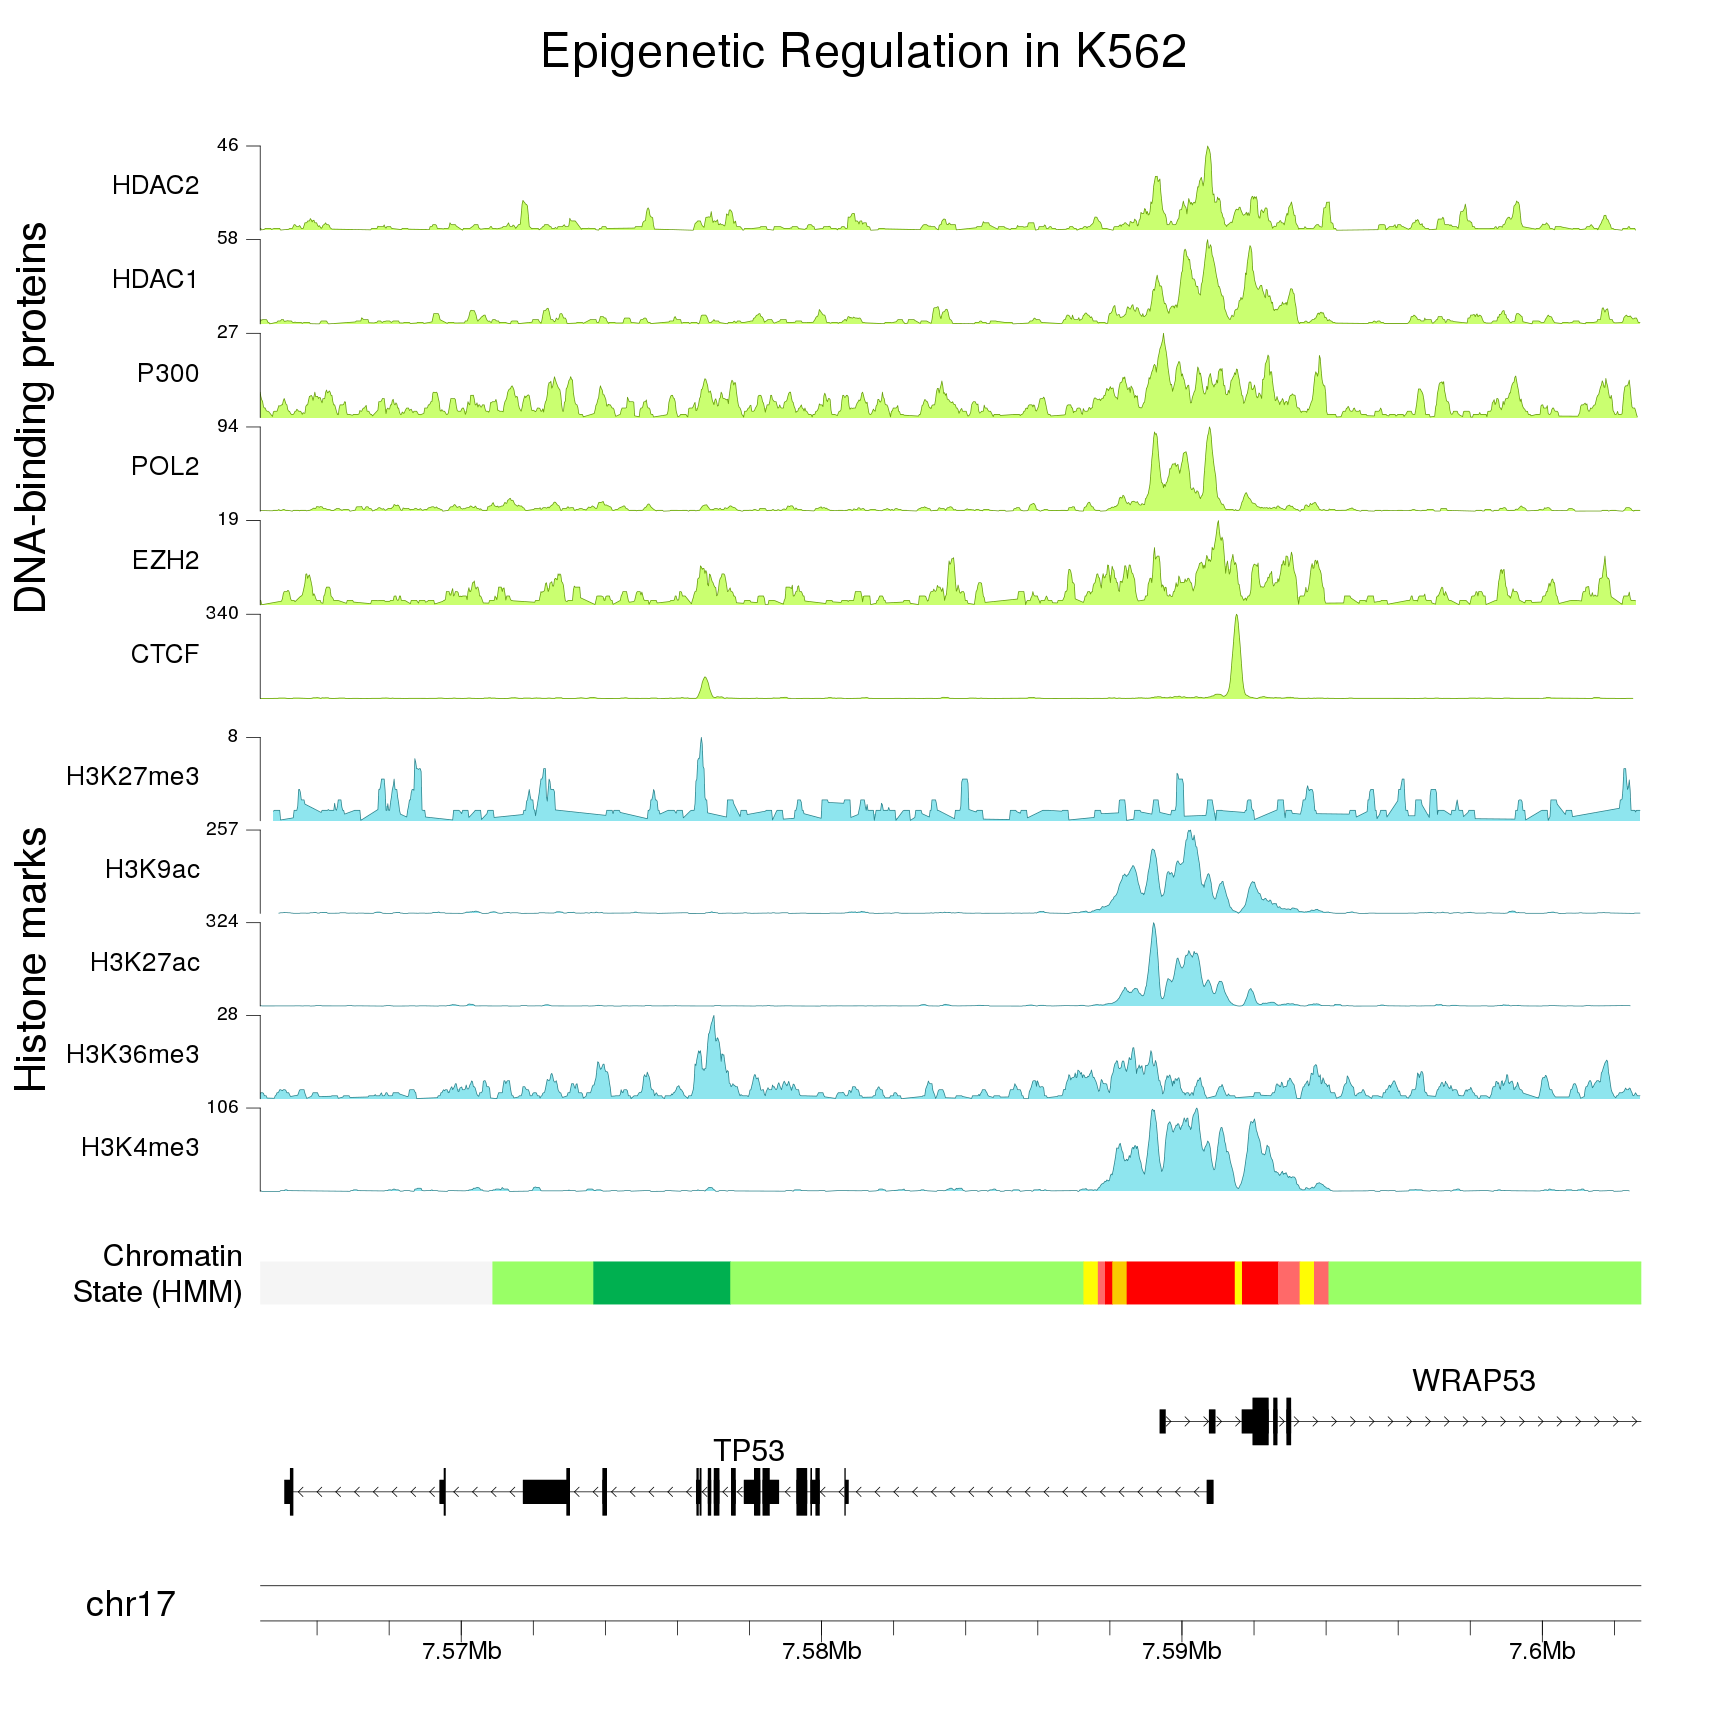 Image of example Epigenetic data from ENCODE